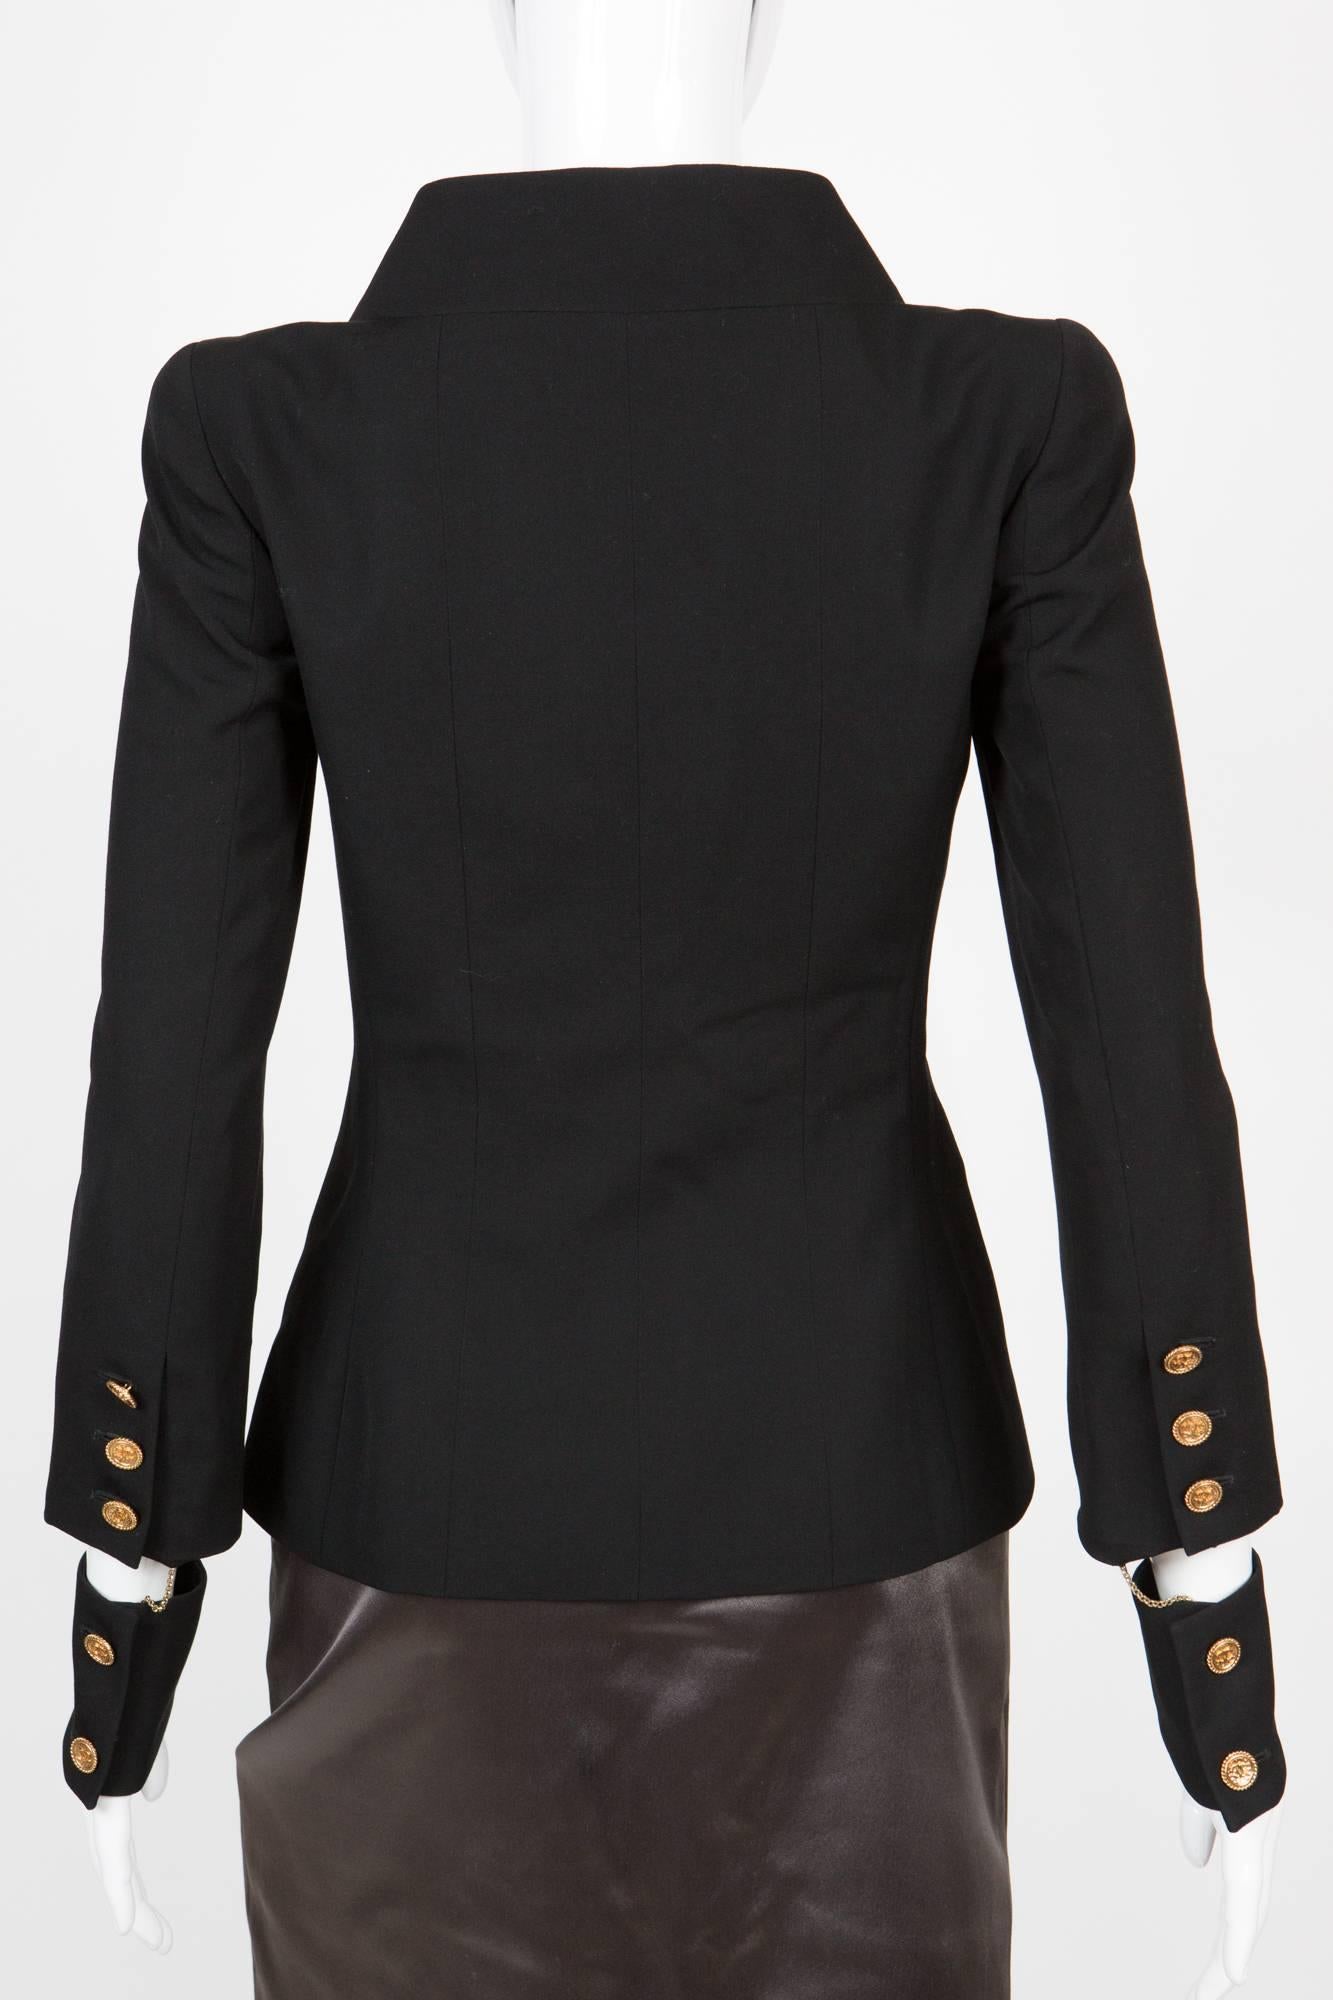 Women's Stunning Black Chanel Jacket